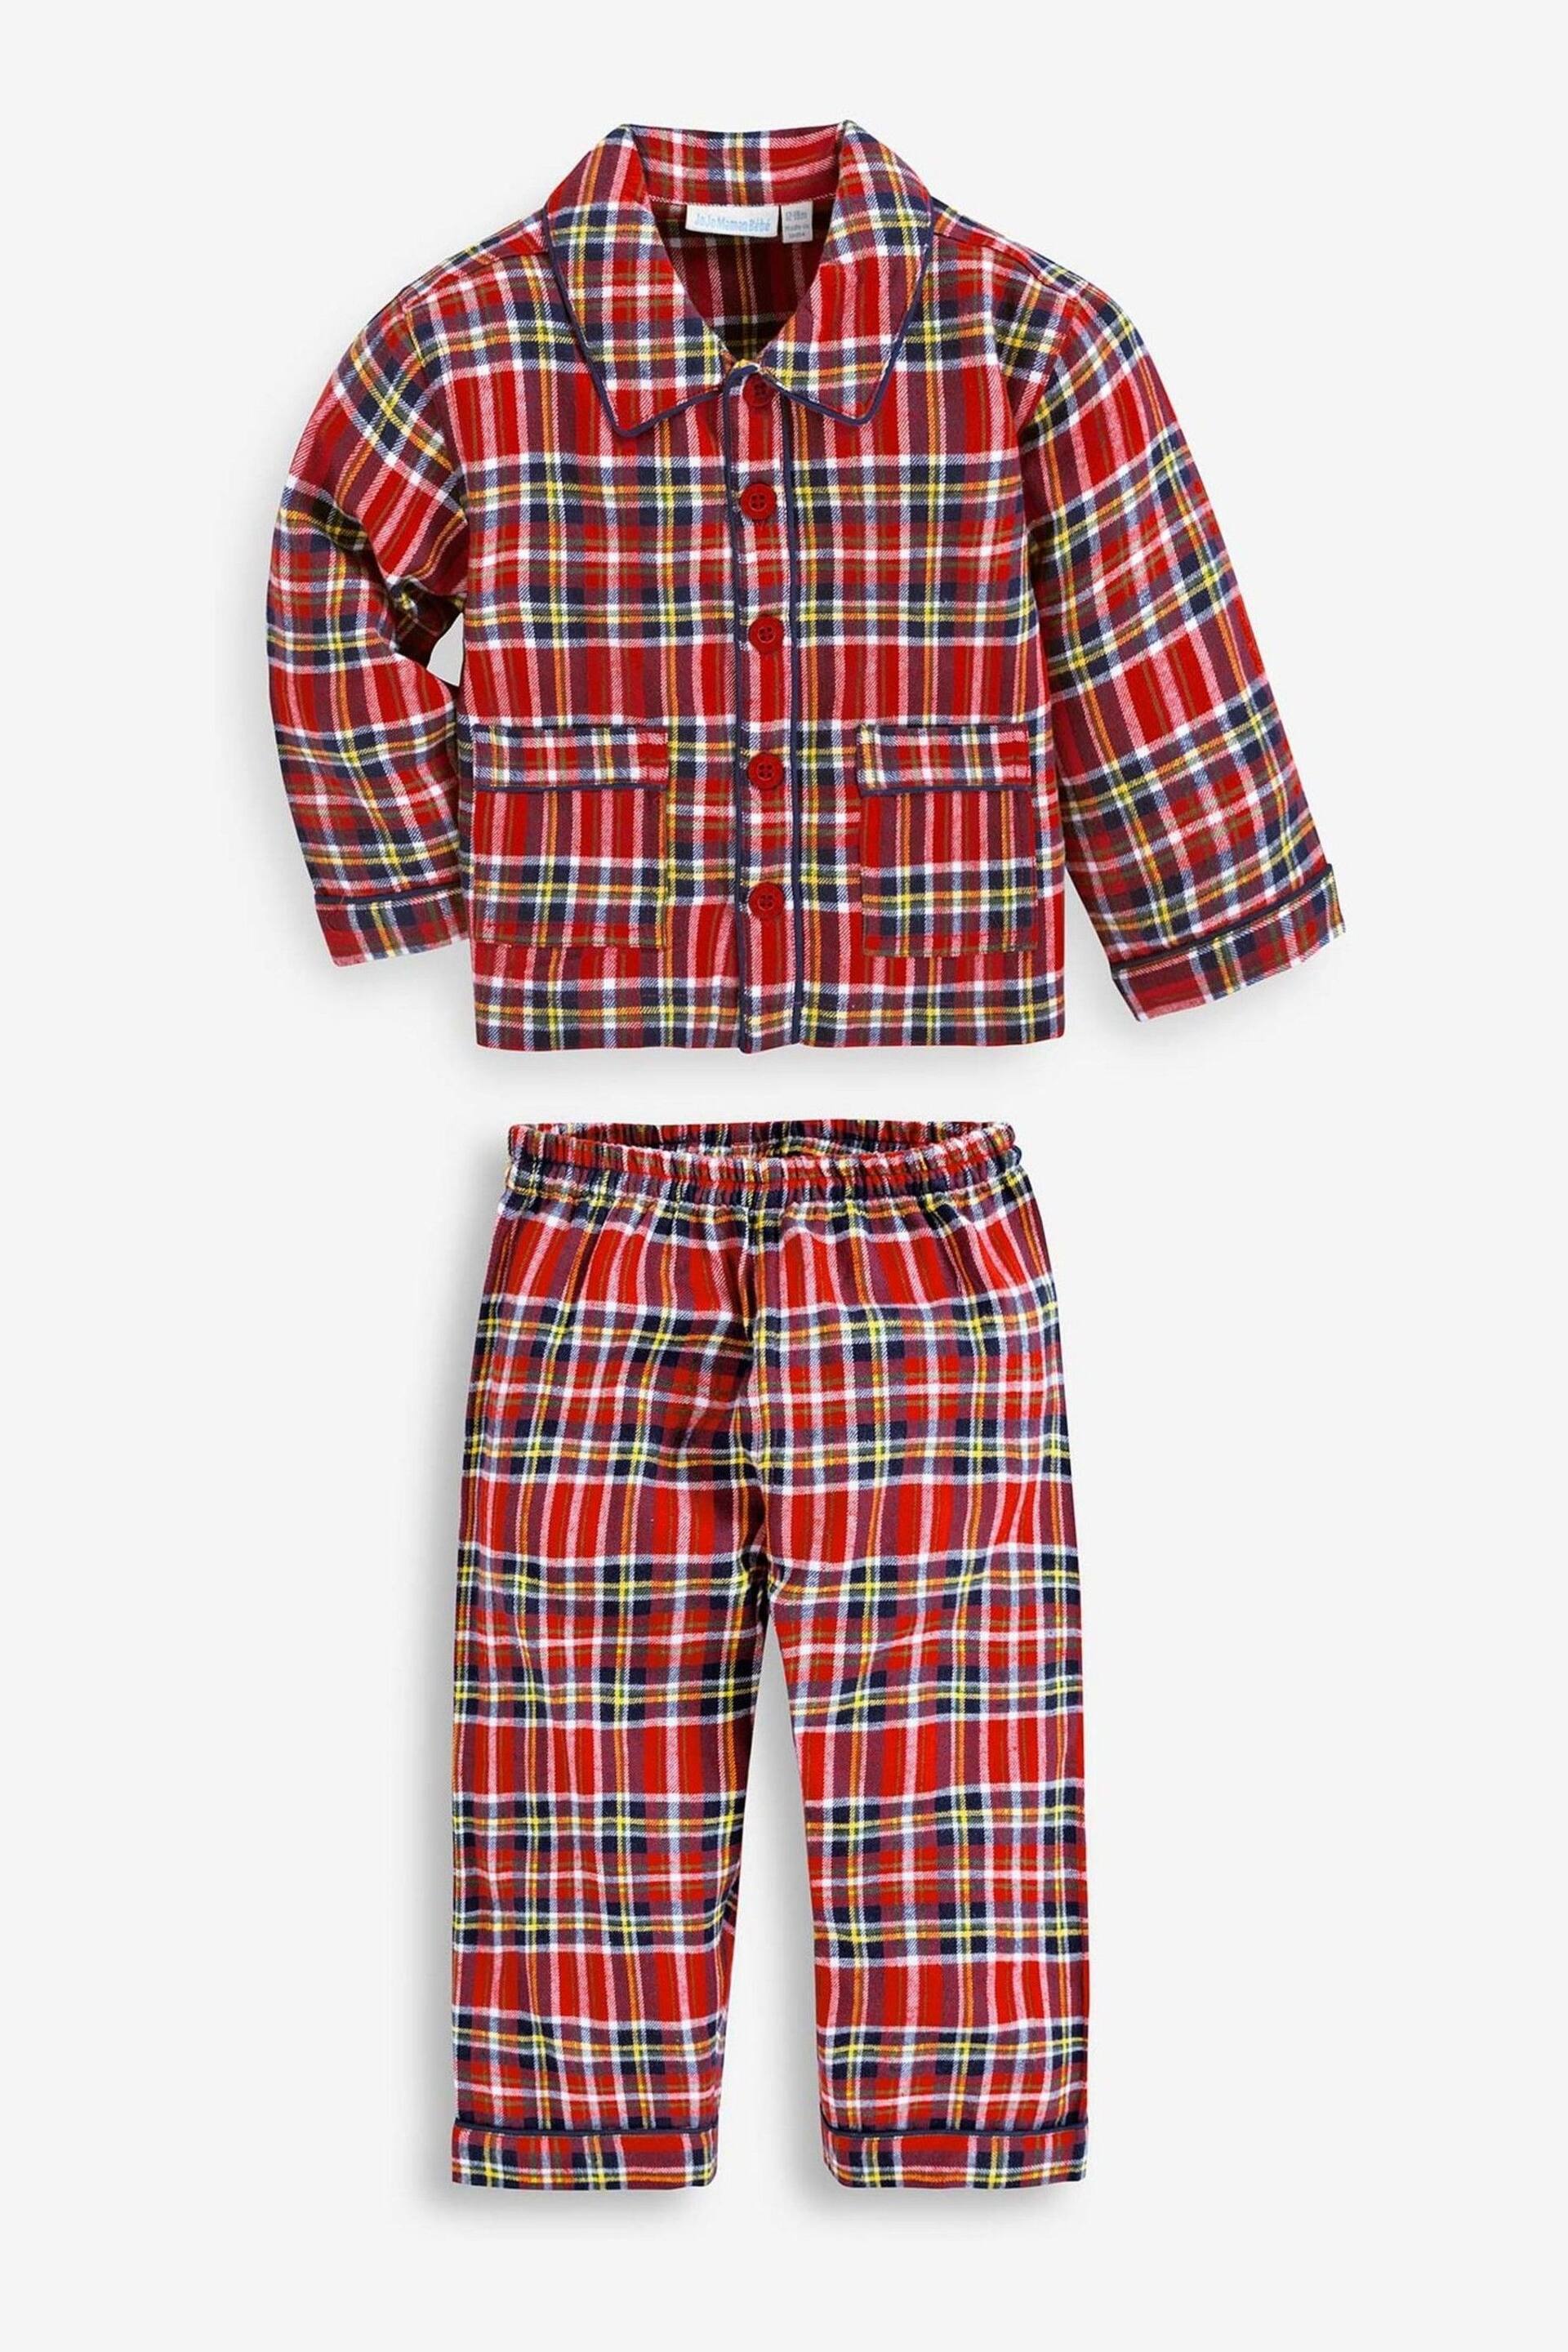 JoJo Maman Bébé Red Classic Tartan Pyjamas - Image 1 of 3